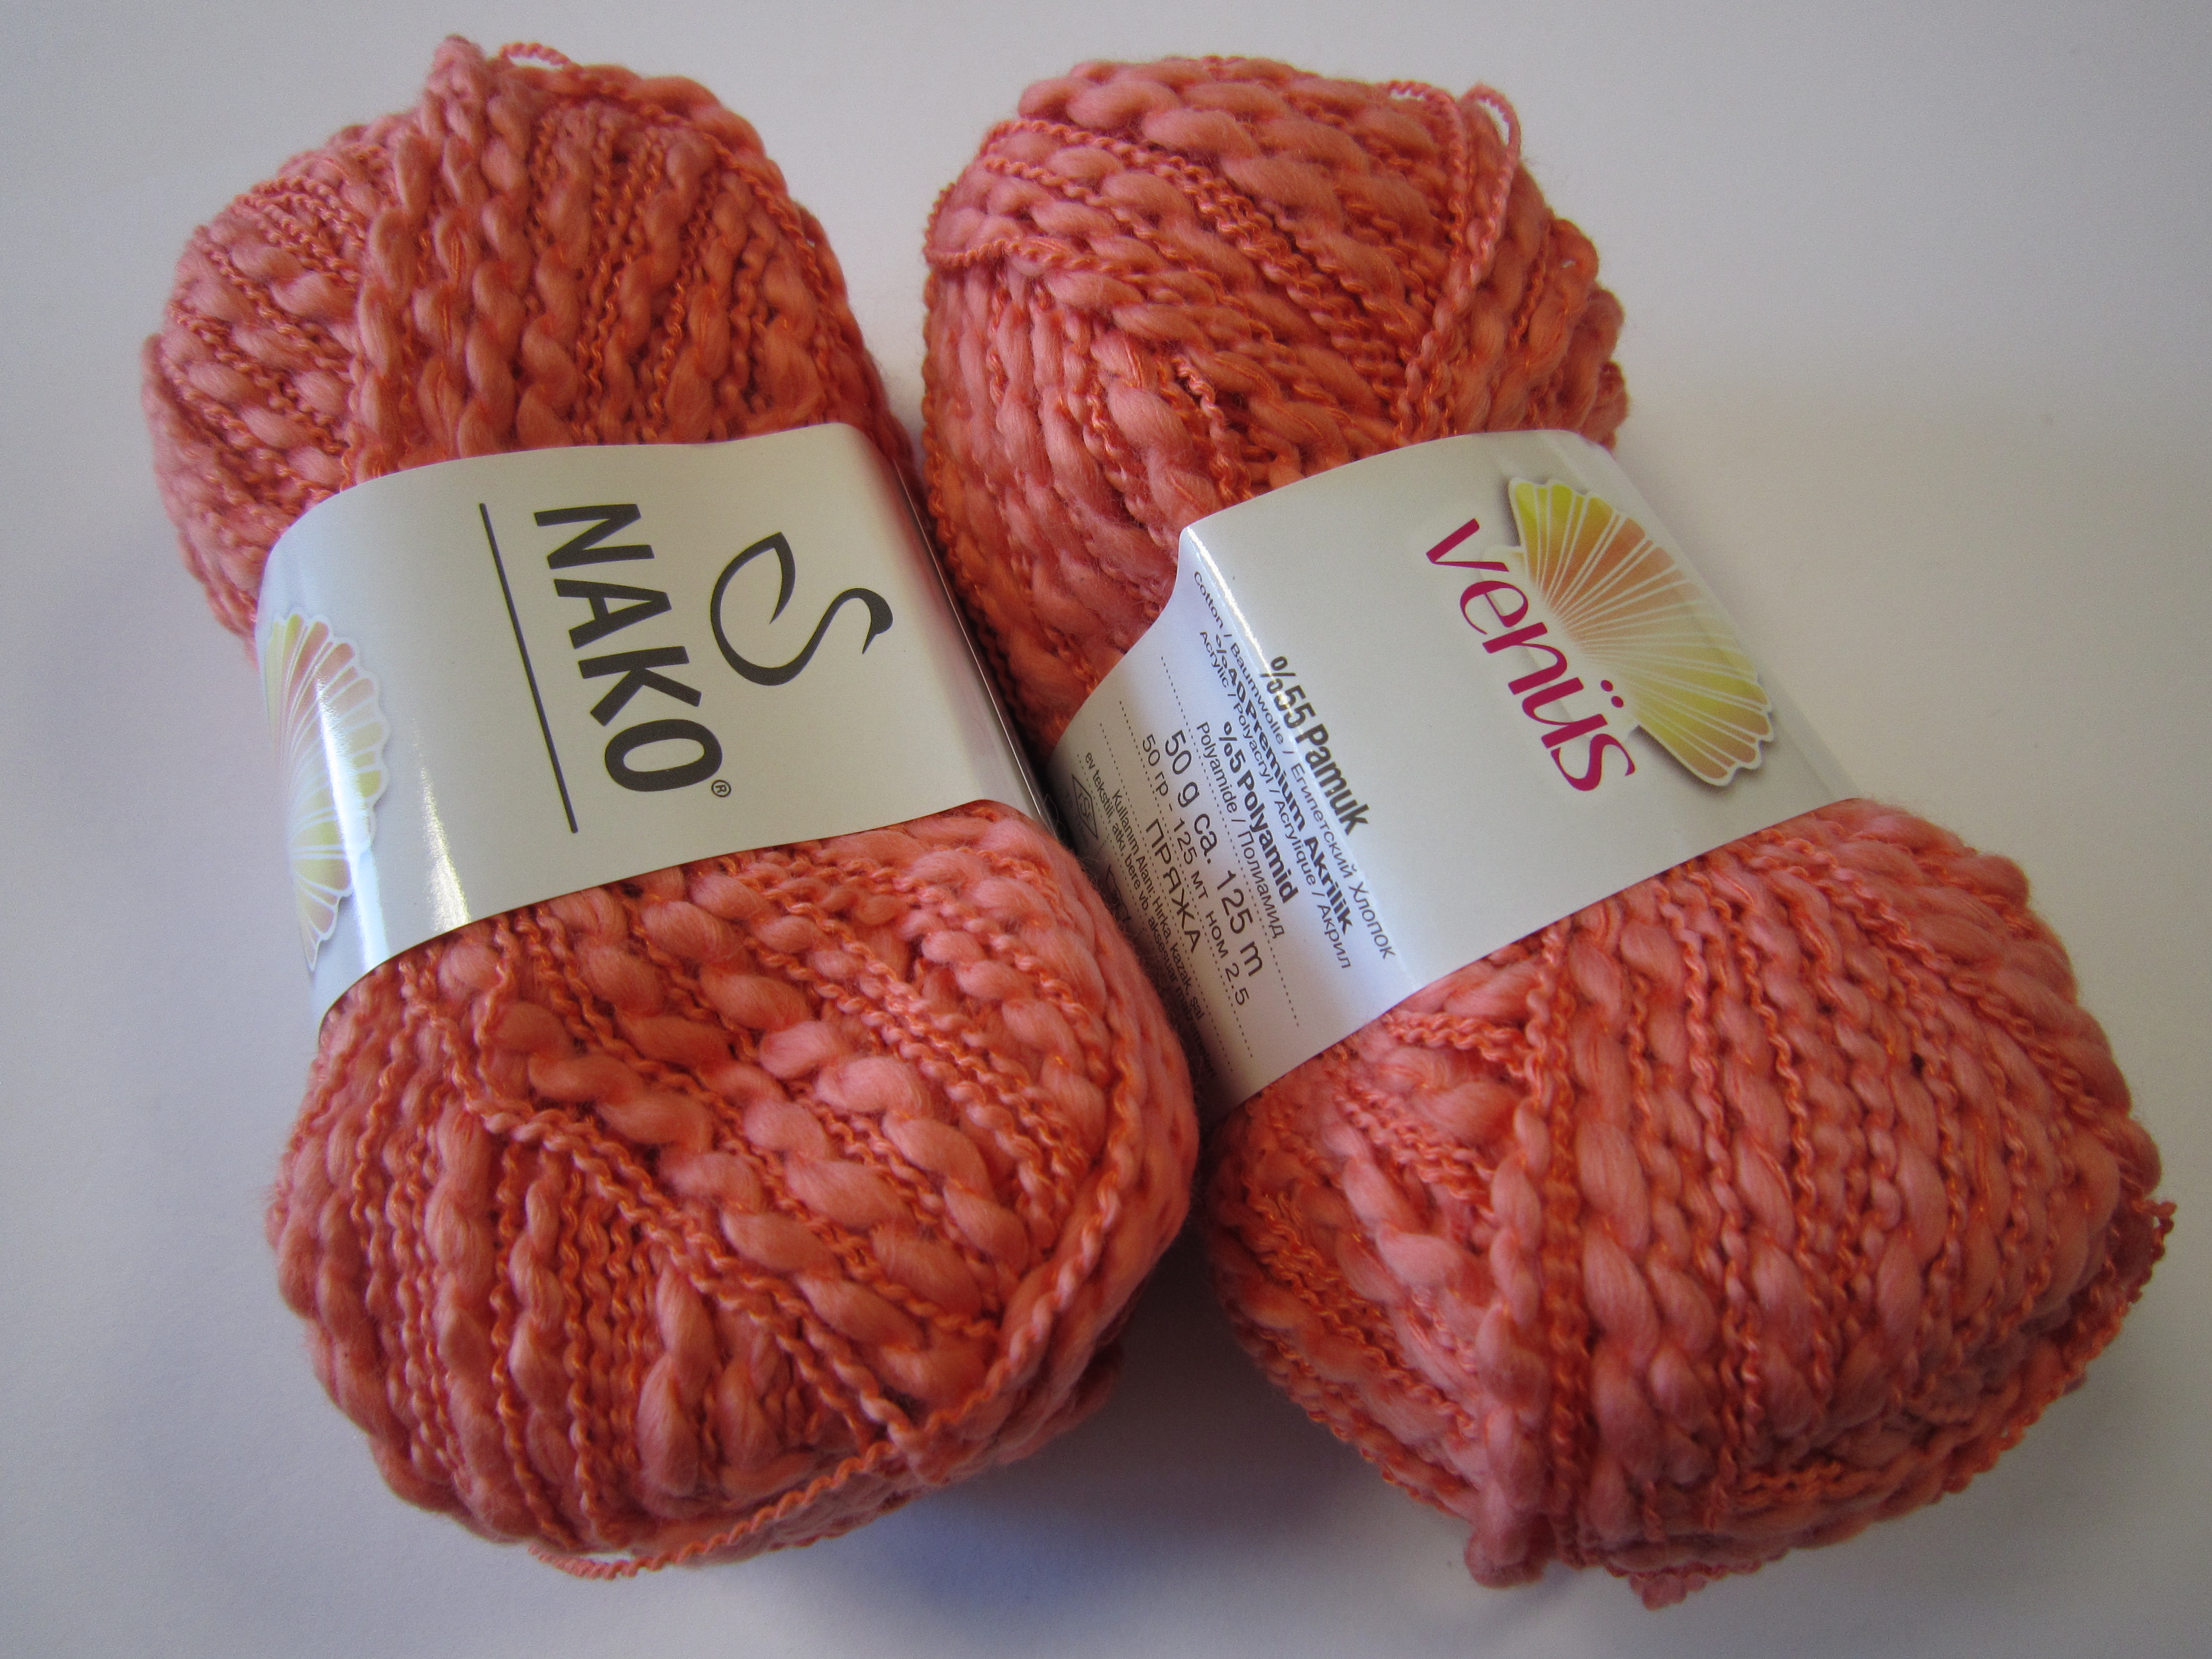 buy venus from nako online yarnstreet com venus knitting crochet